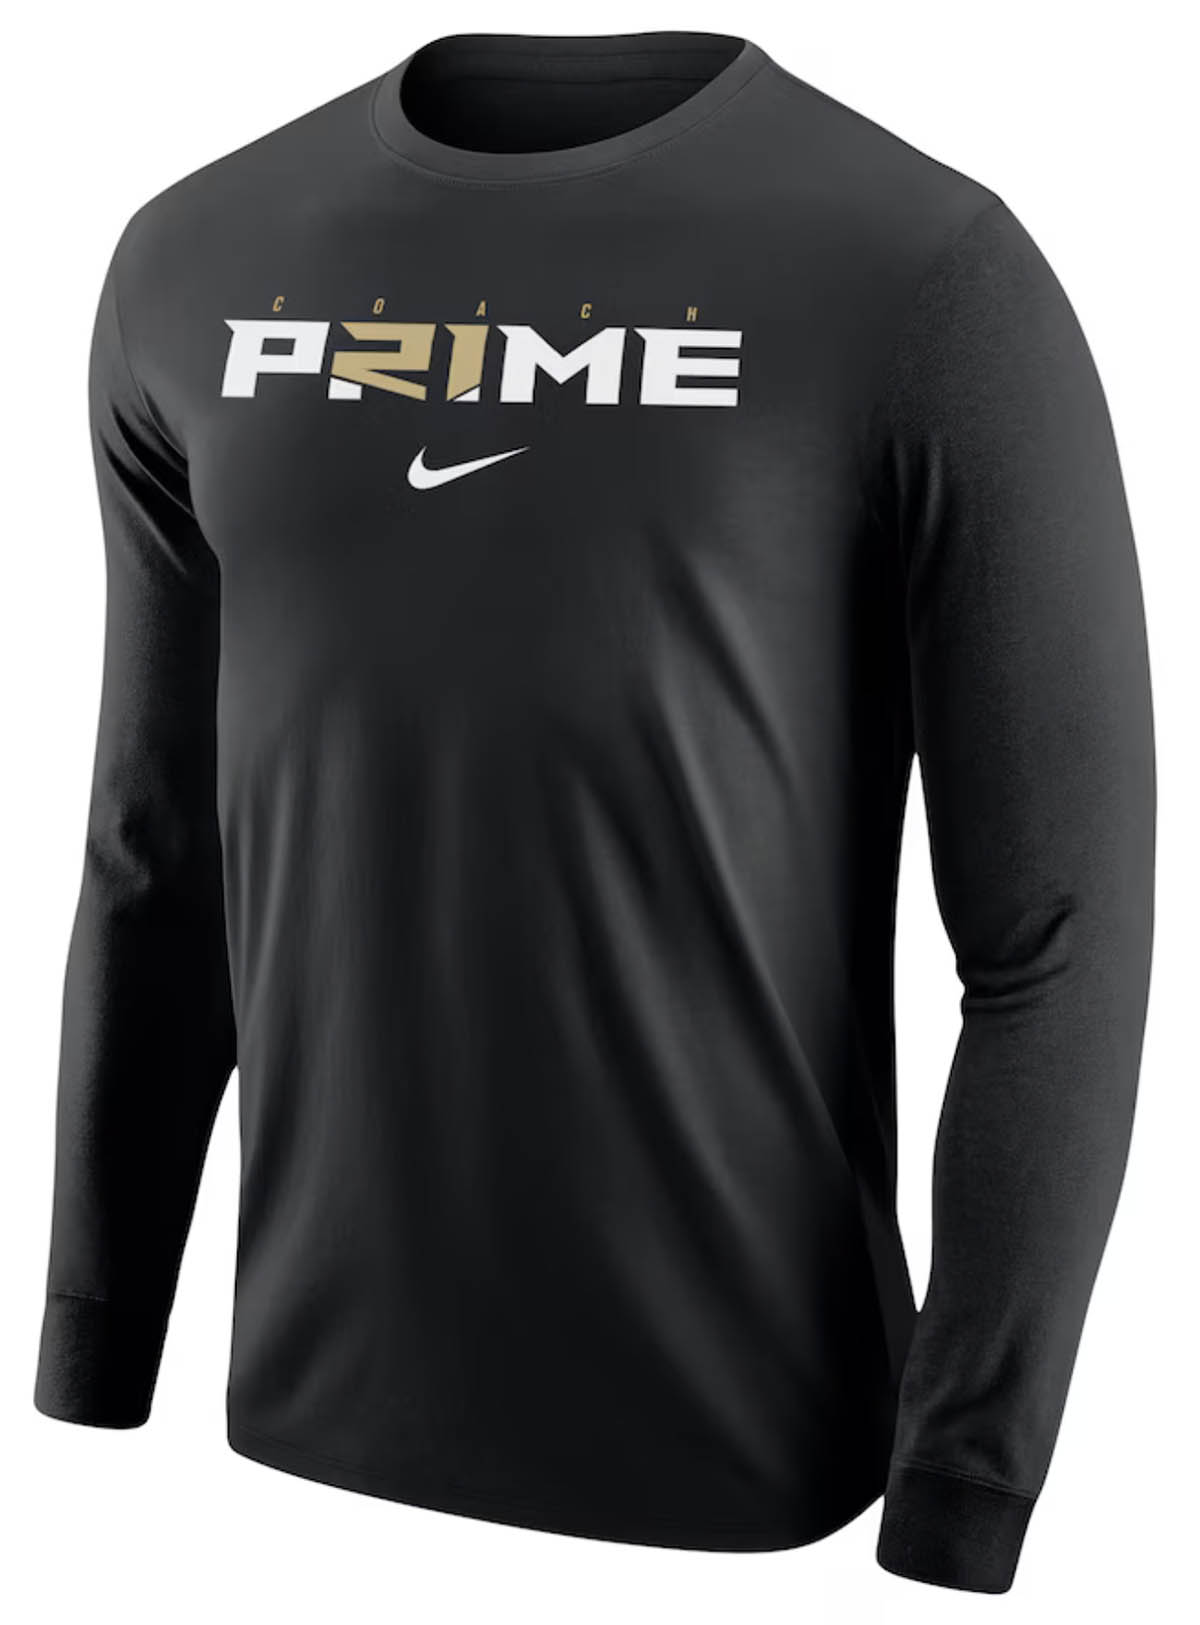 Nike-Deion-Sanders-Prime-Long-Sleeve-T-Shirt-Black-Gold